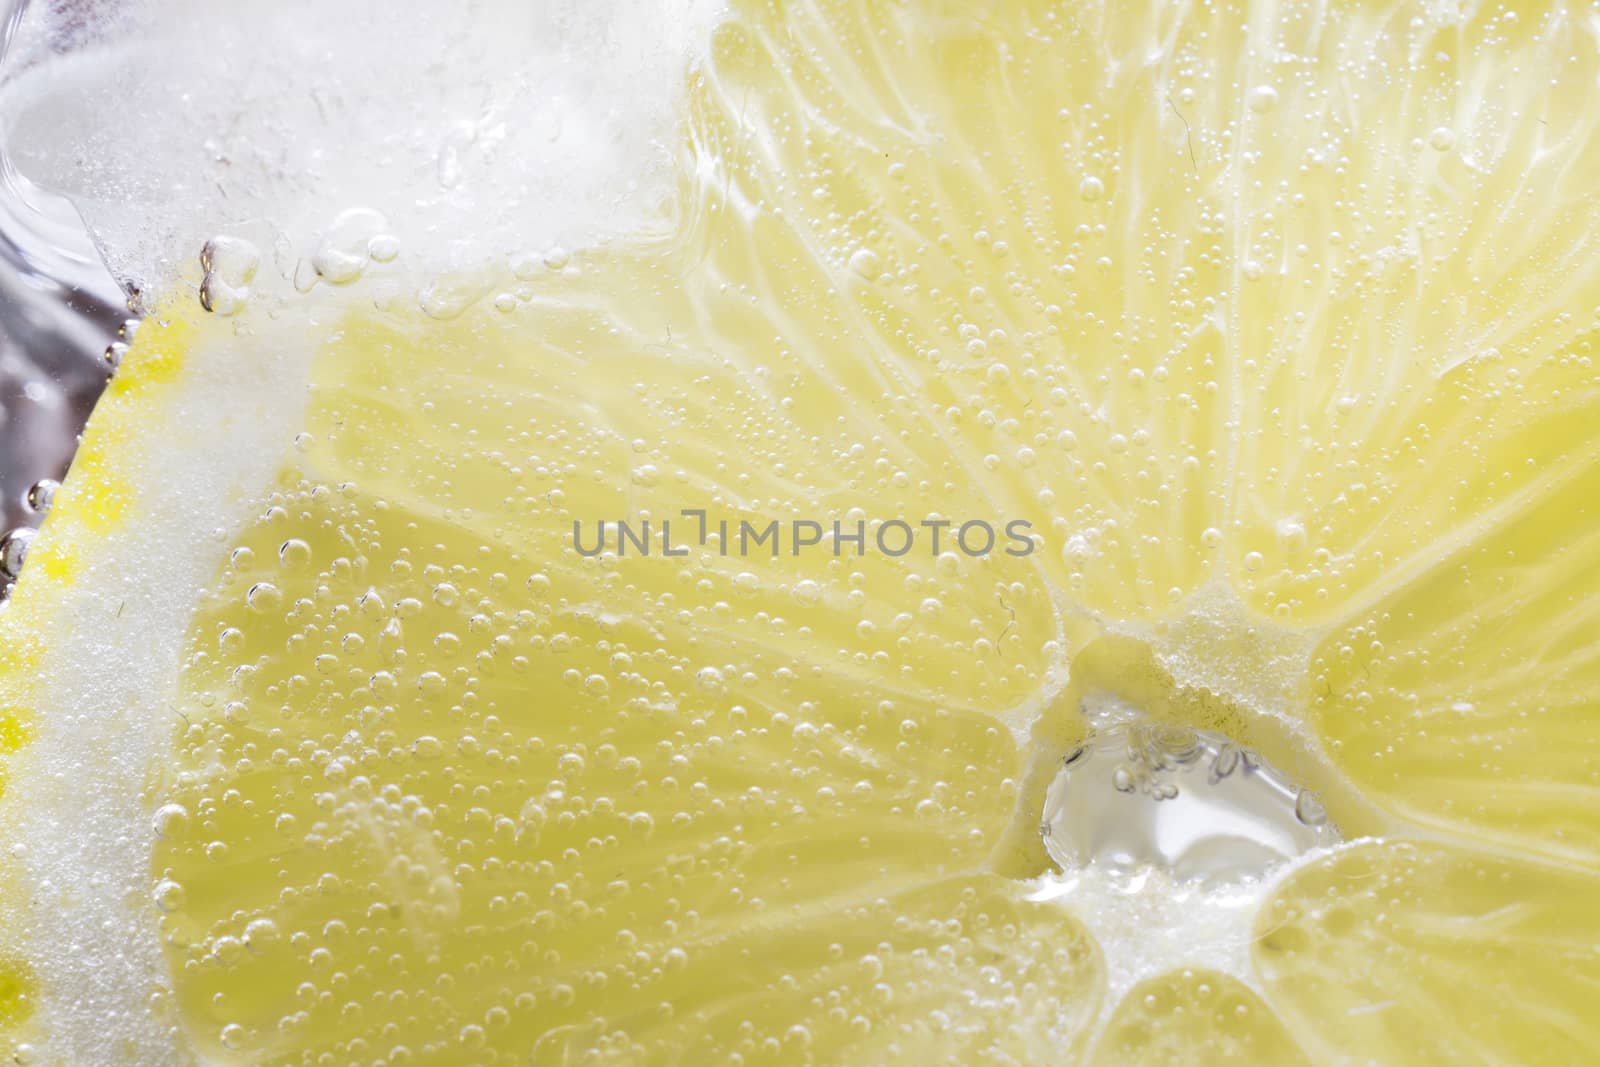 The photo depicts a lemon in bubbles